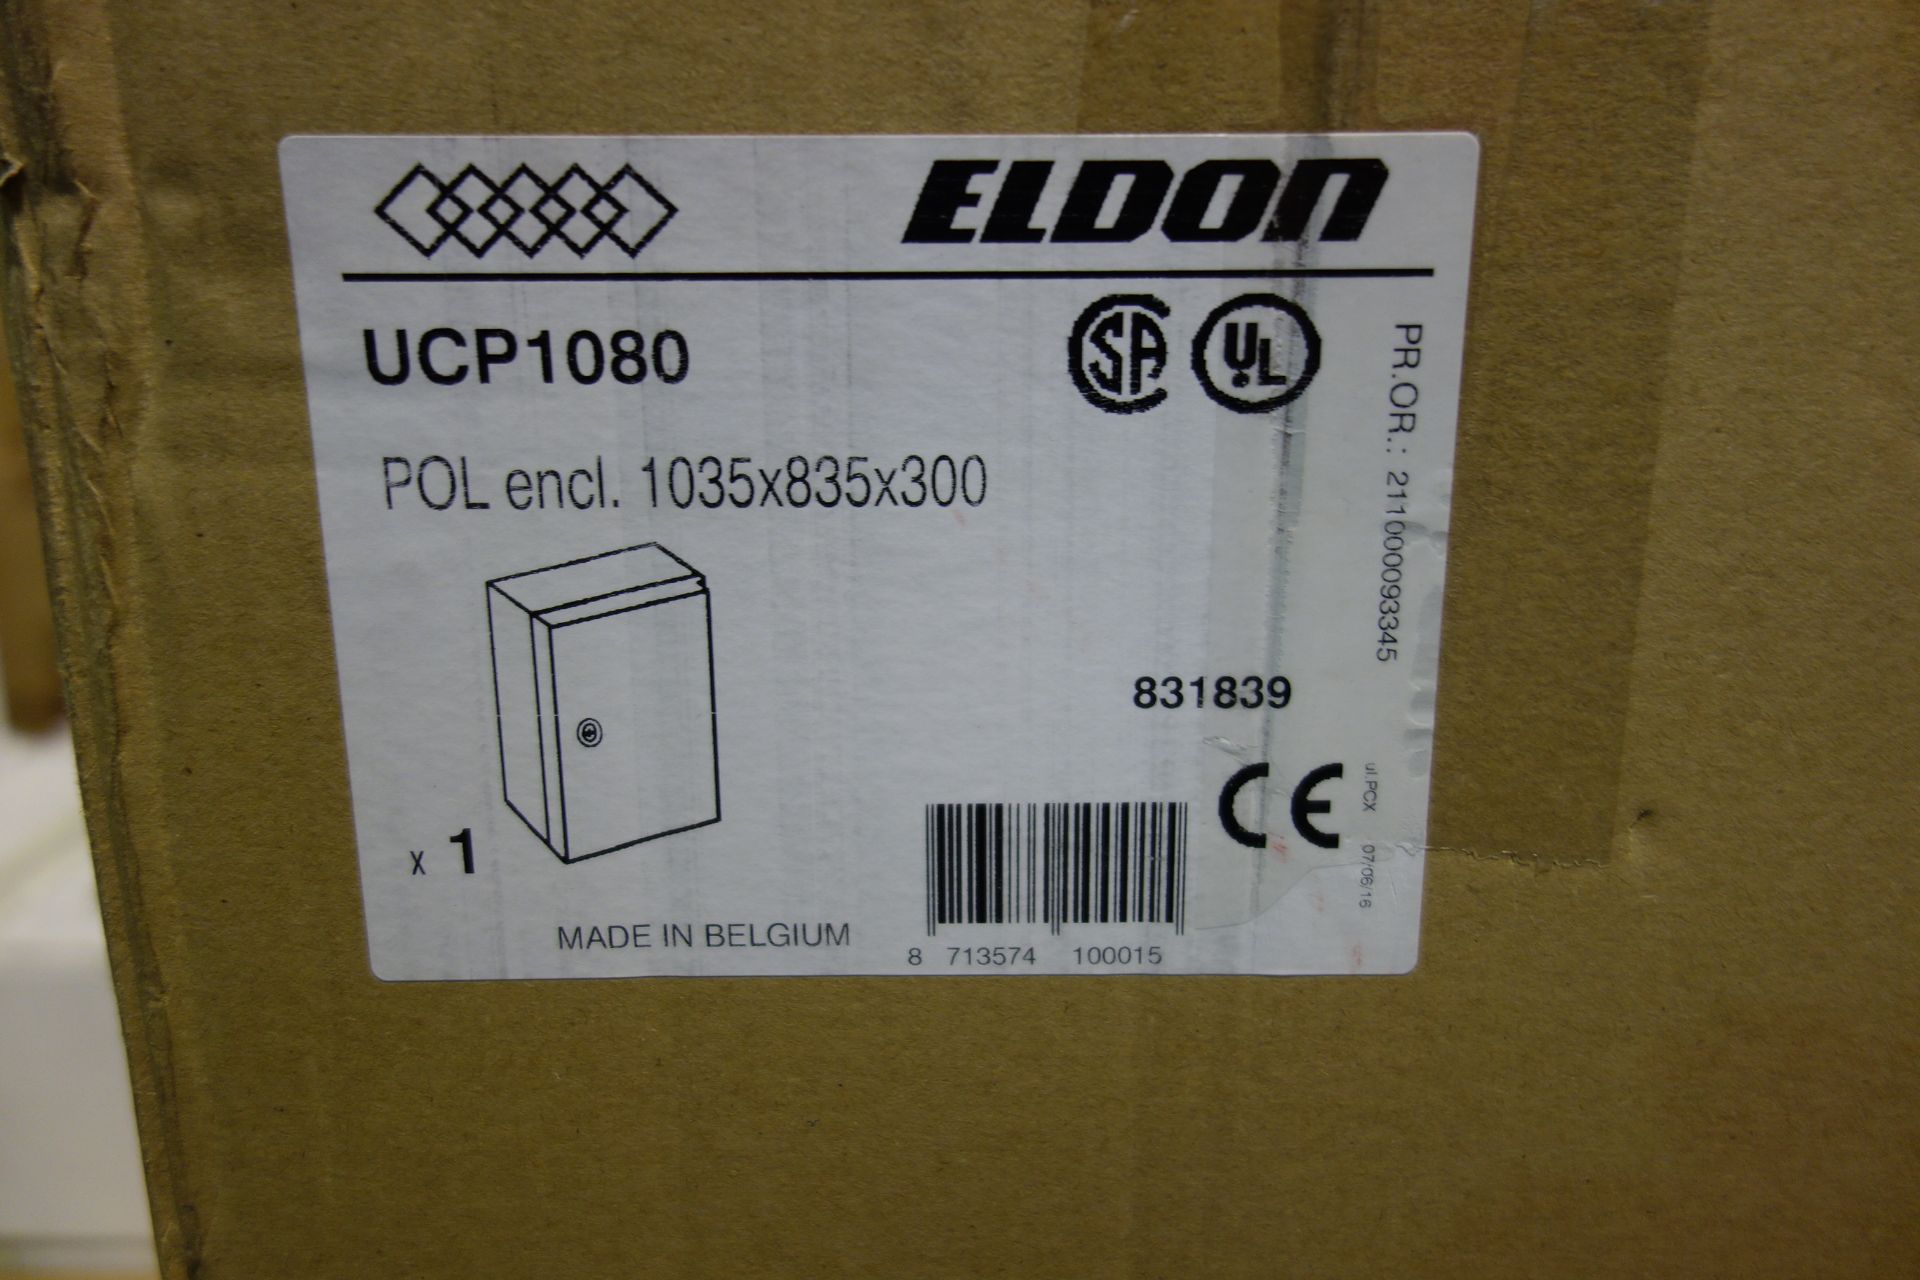 1 X ELDON UCP1080 POL Enclosure 1035 X 835 X 300